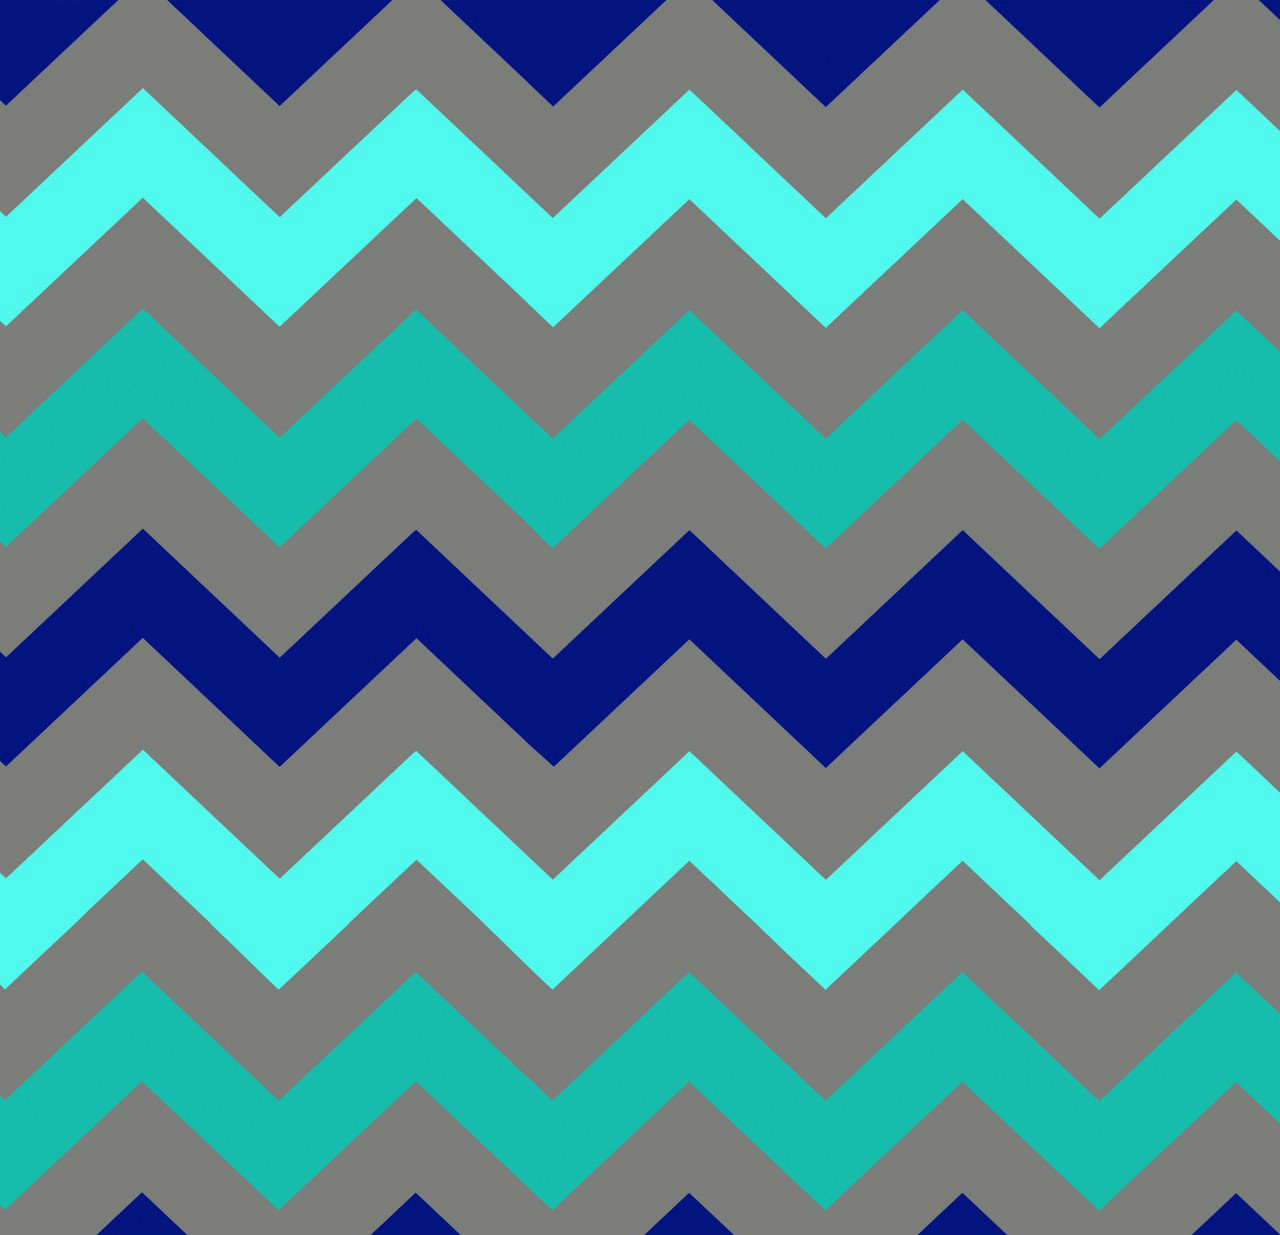 Blue Chevron Pattern Backgrounds